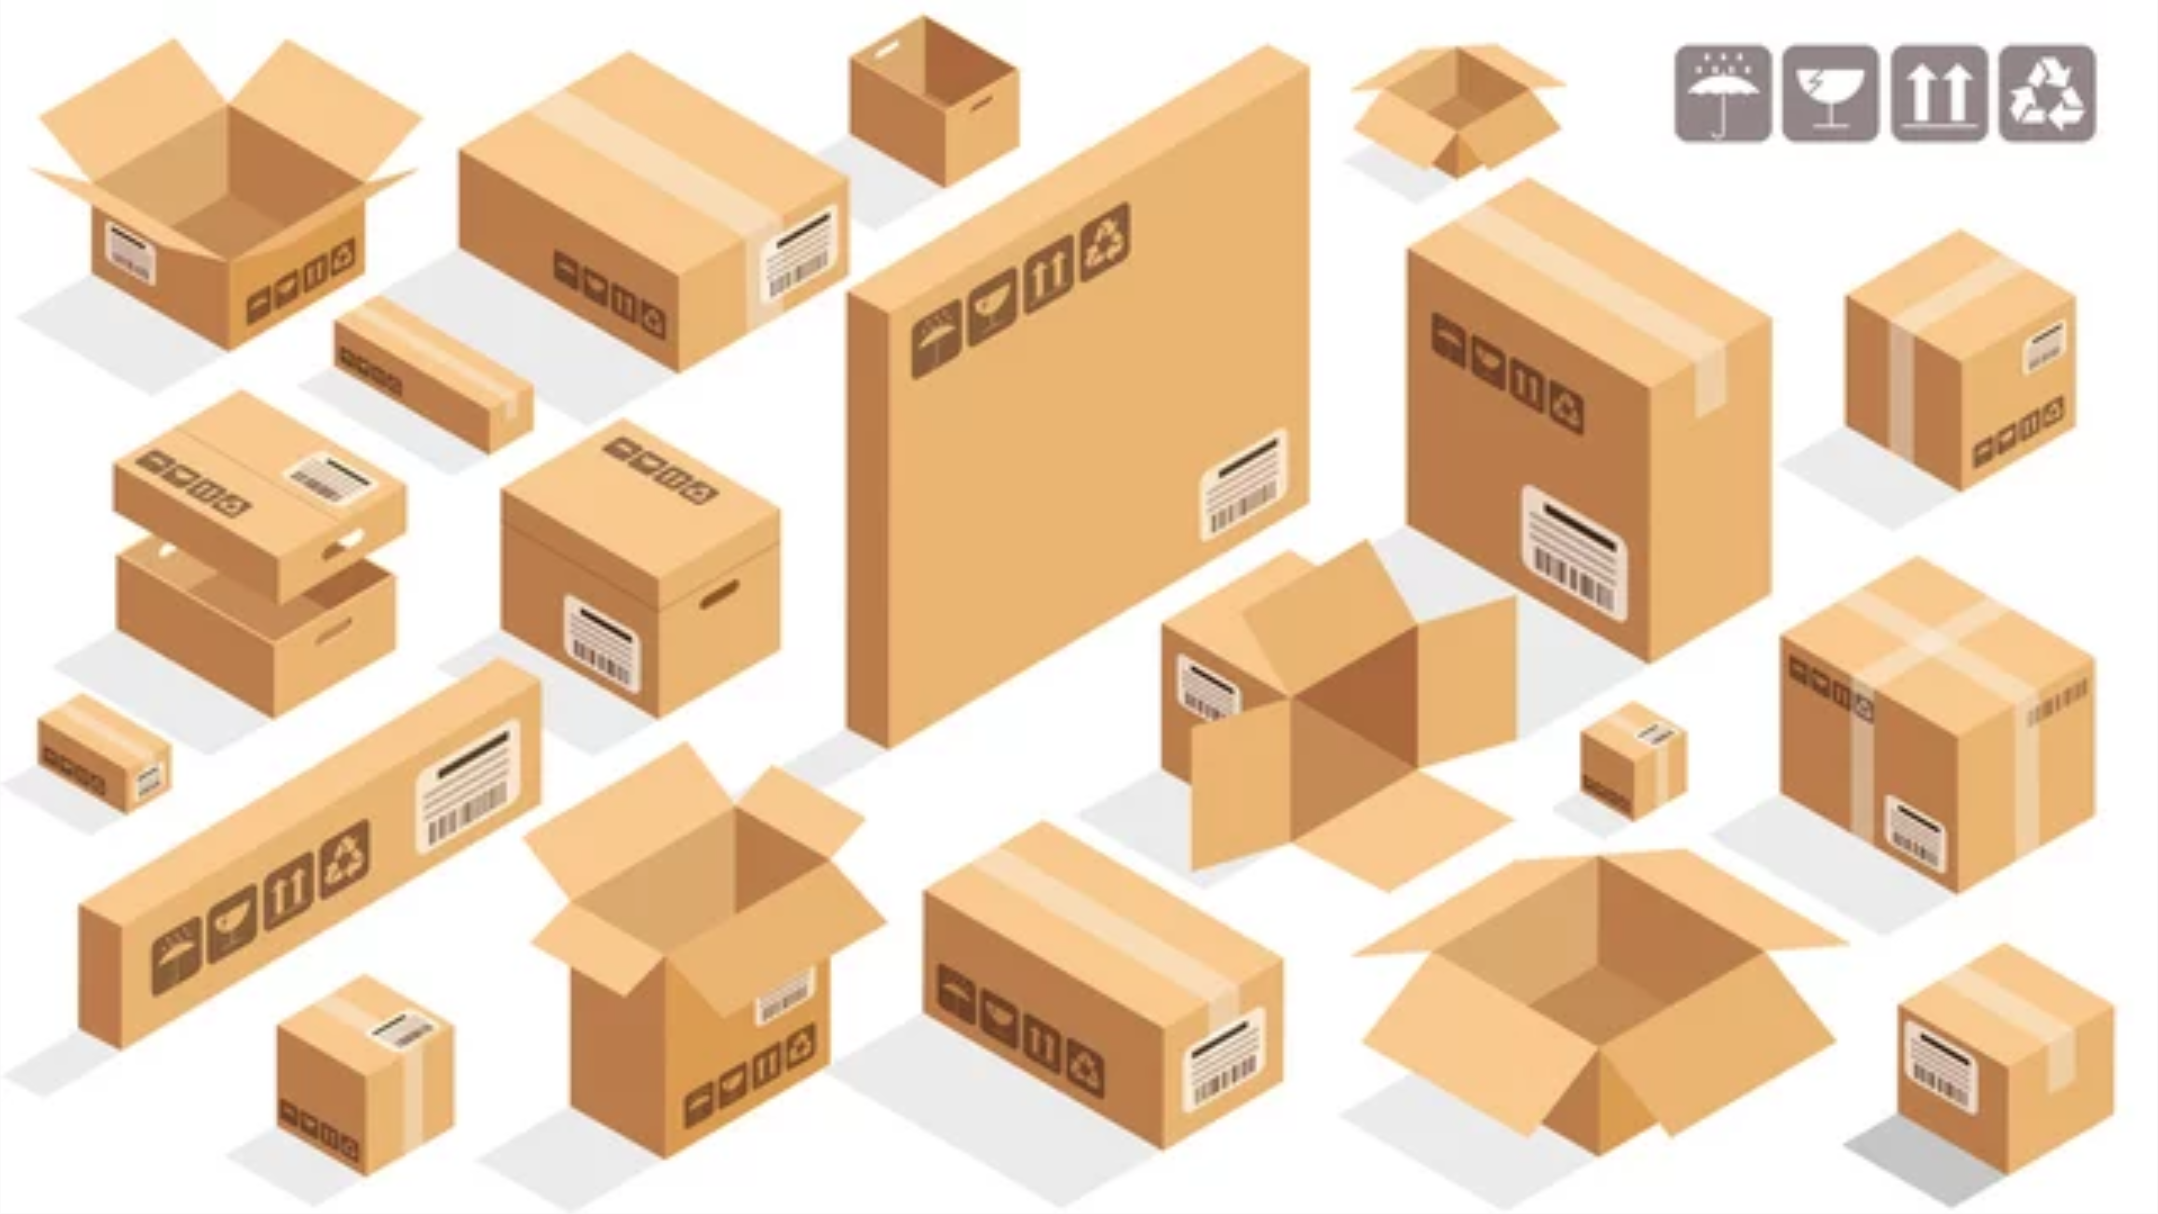 Хранение, упаковка, сборка и доставка товаров по схеме FBS